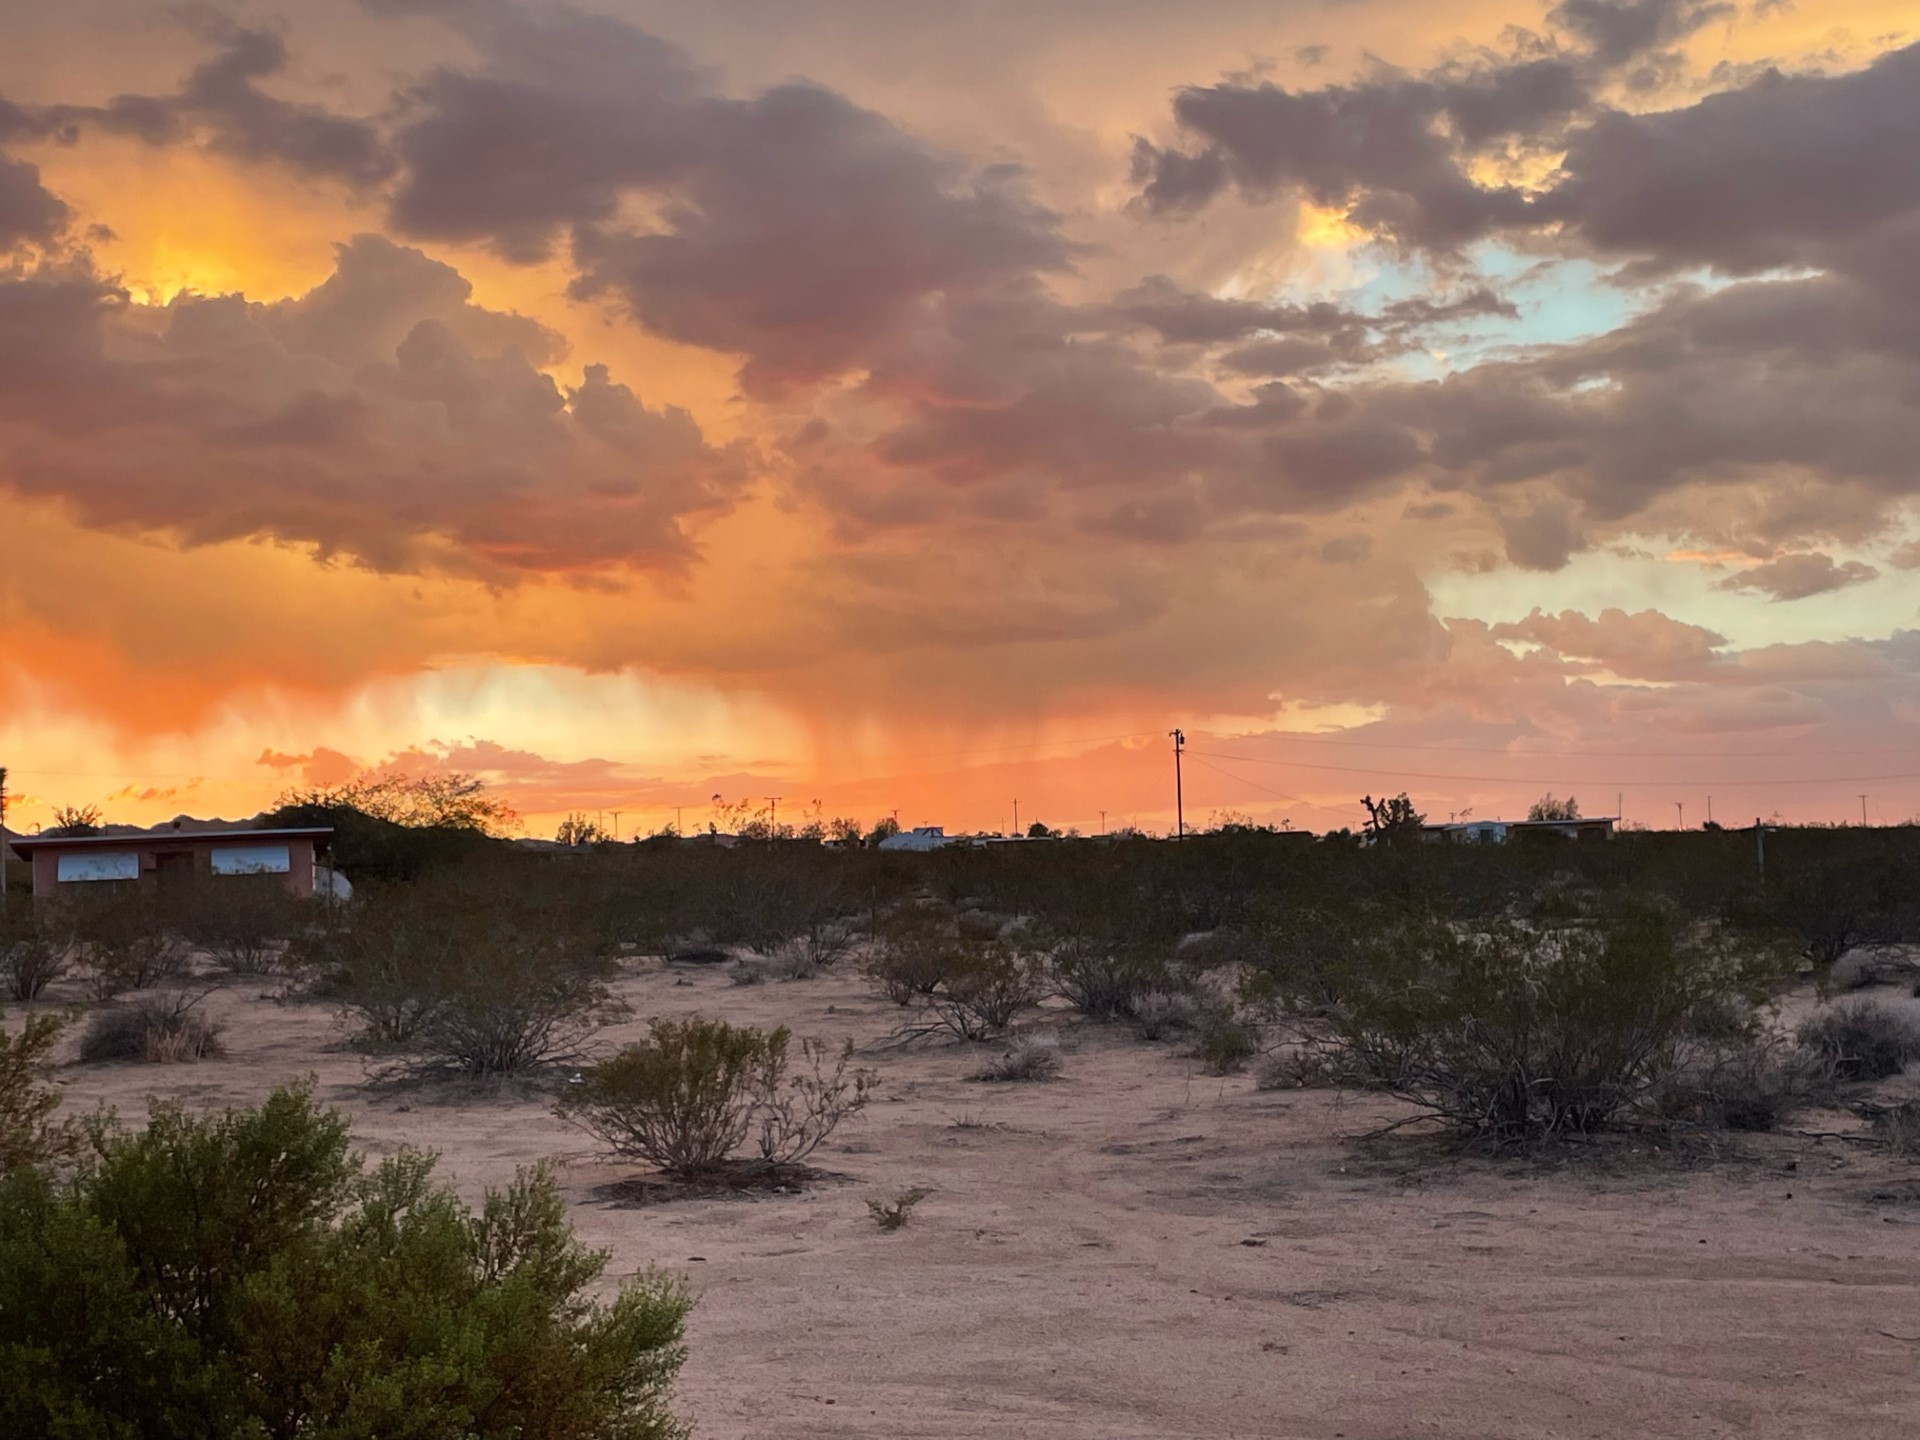 The sky and desert landscape in Yucca Valley, CA courtesy of Ellen Reid